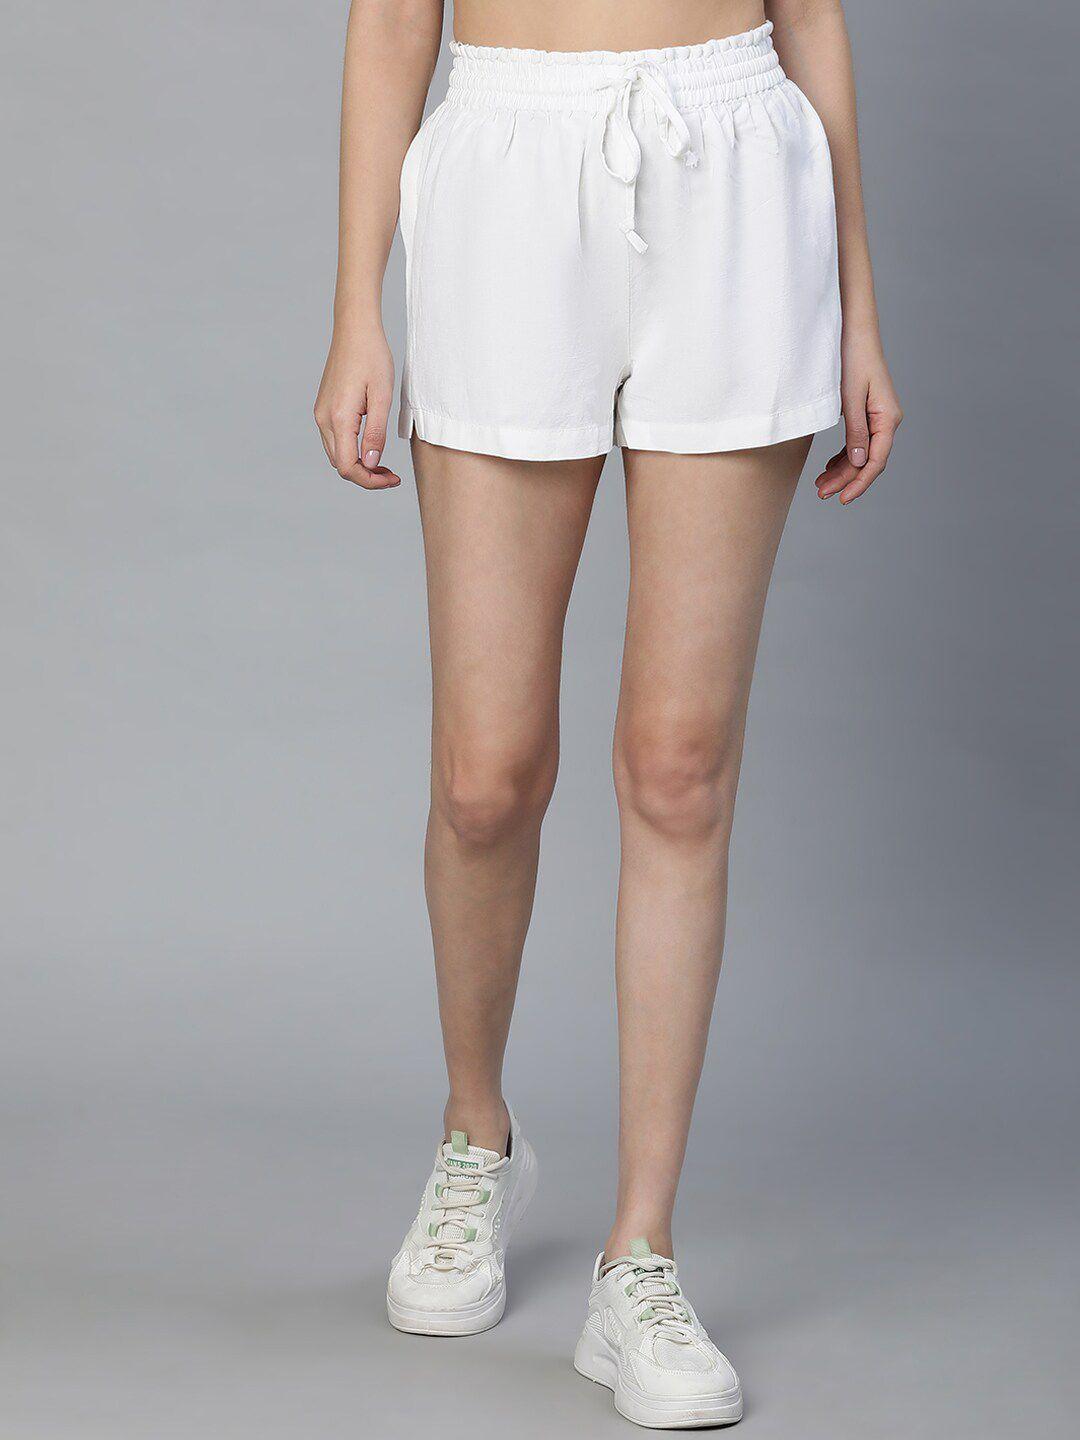 oxolloxo-women-mid-rise-linen-shorts